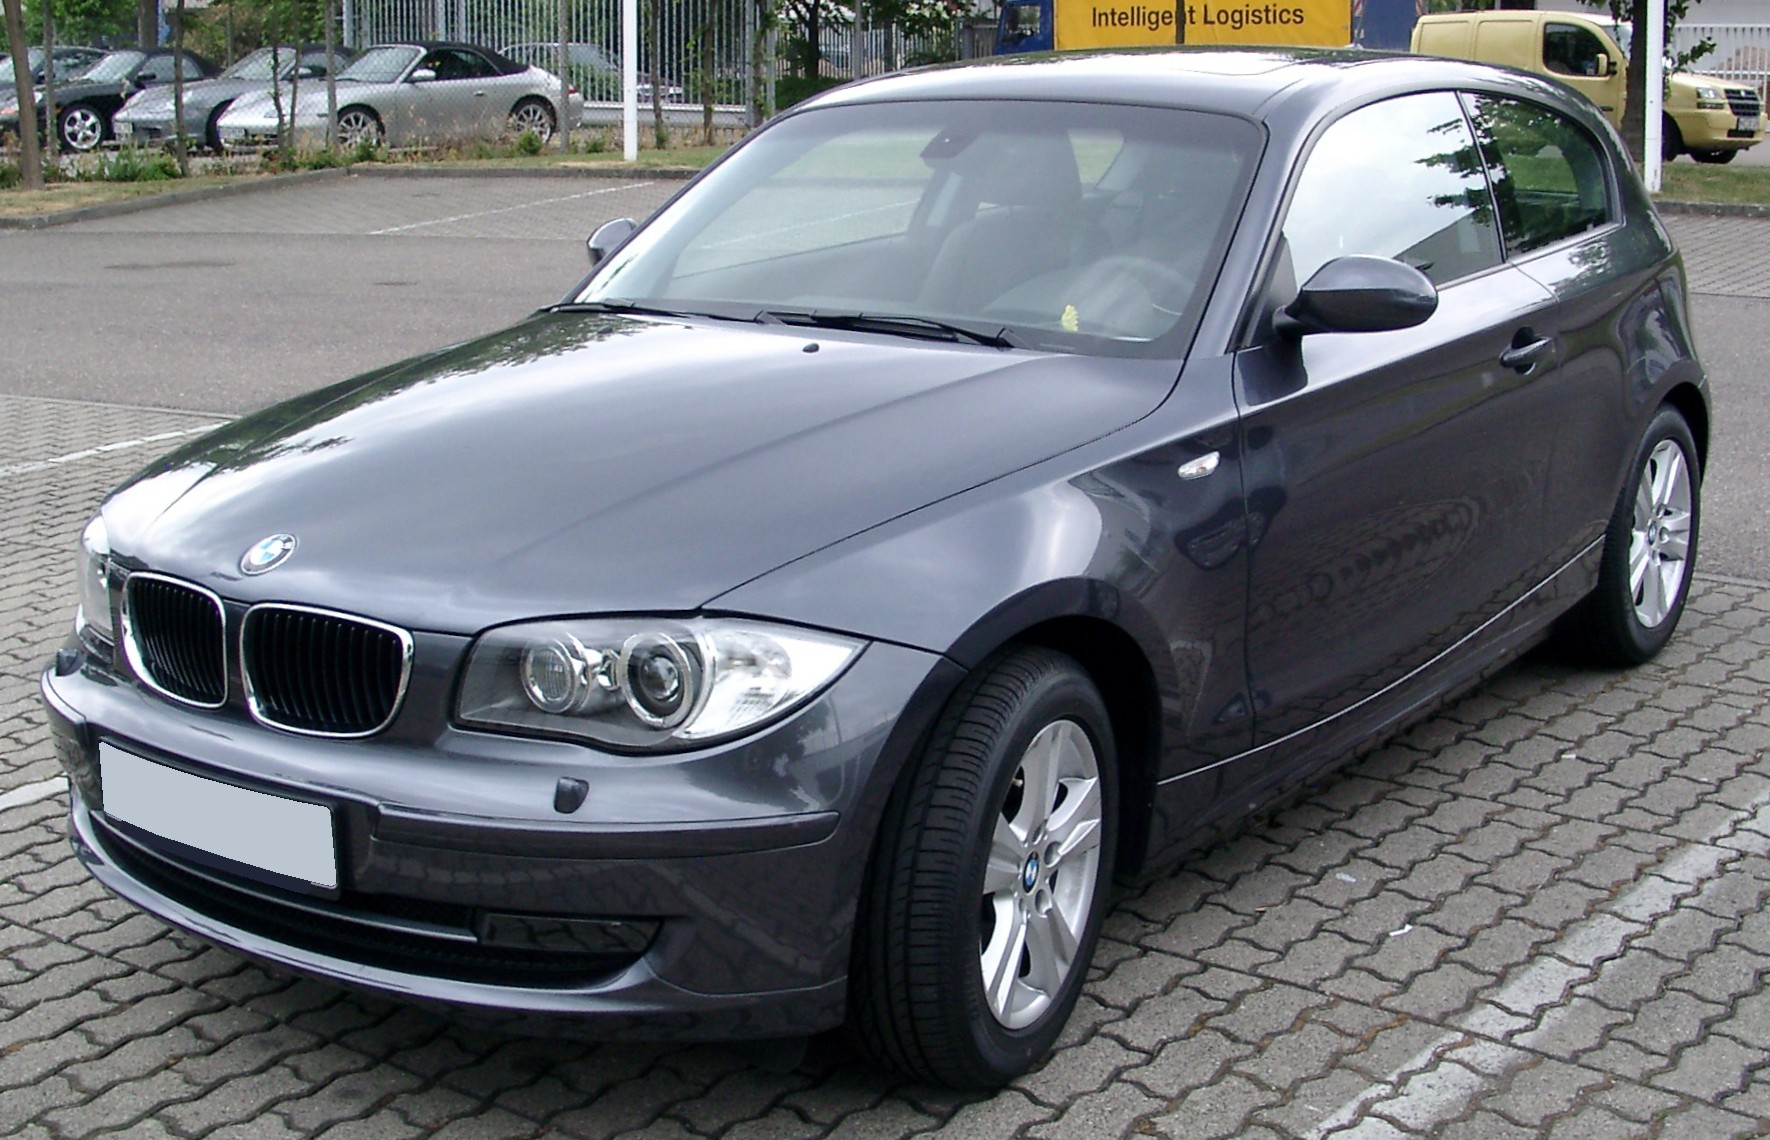 BMW_E87_front_20080524.jpg